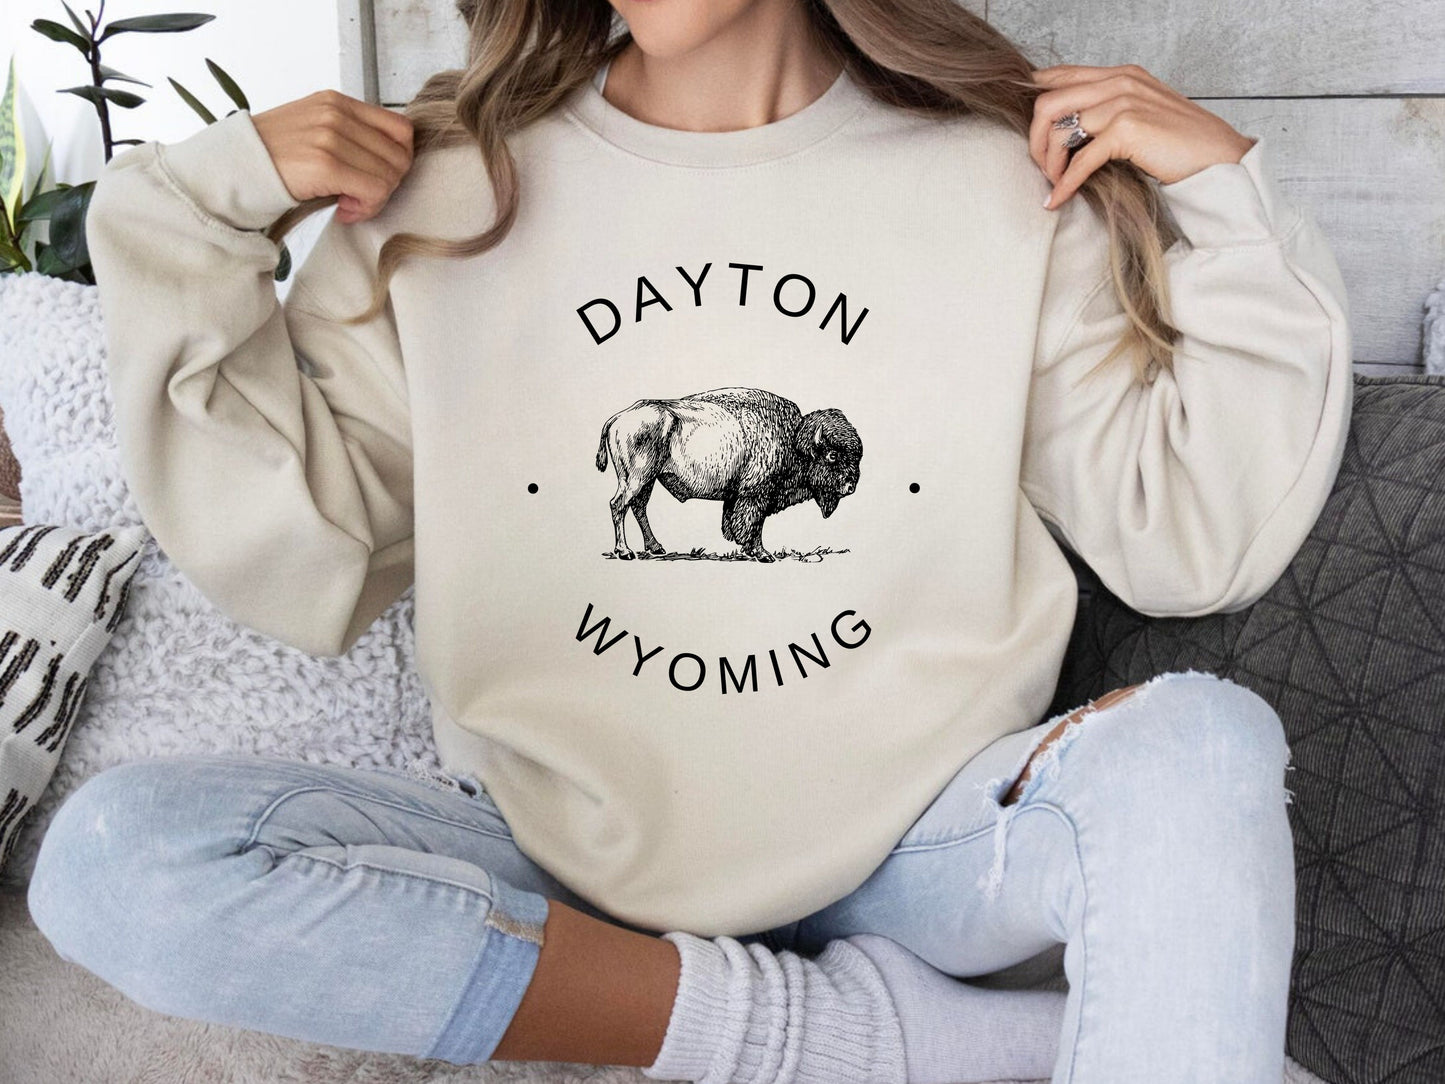 Dayton Women Wyoming Sweatshirt